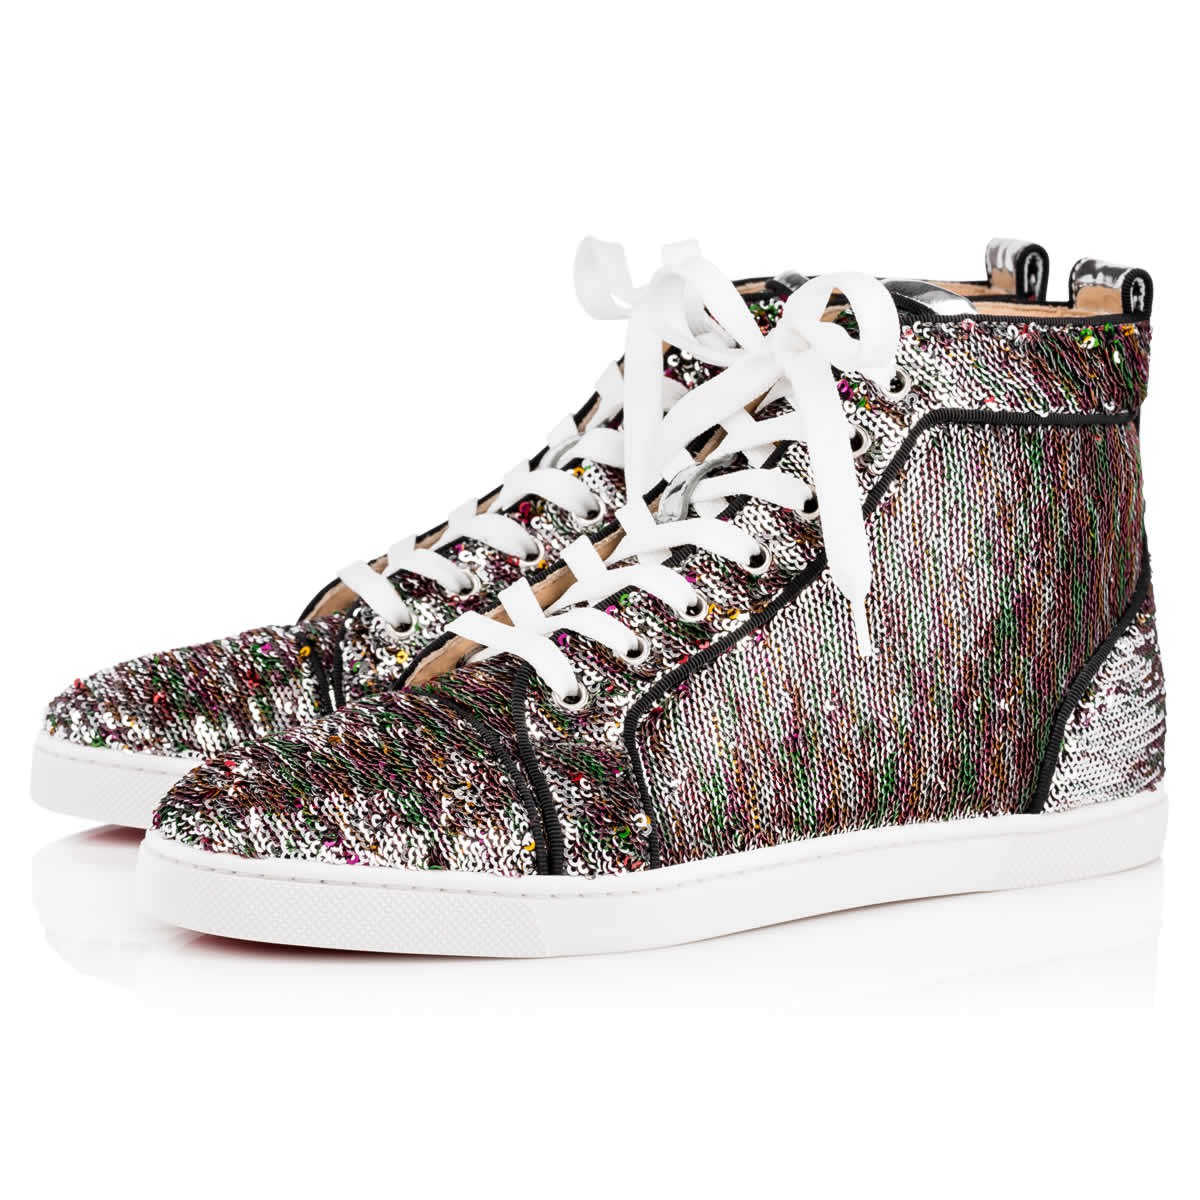 Christian Louboutin Sneakers: A Great Gift Idea | Fashion.Luxury